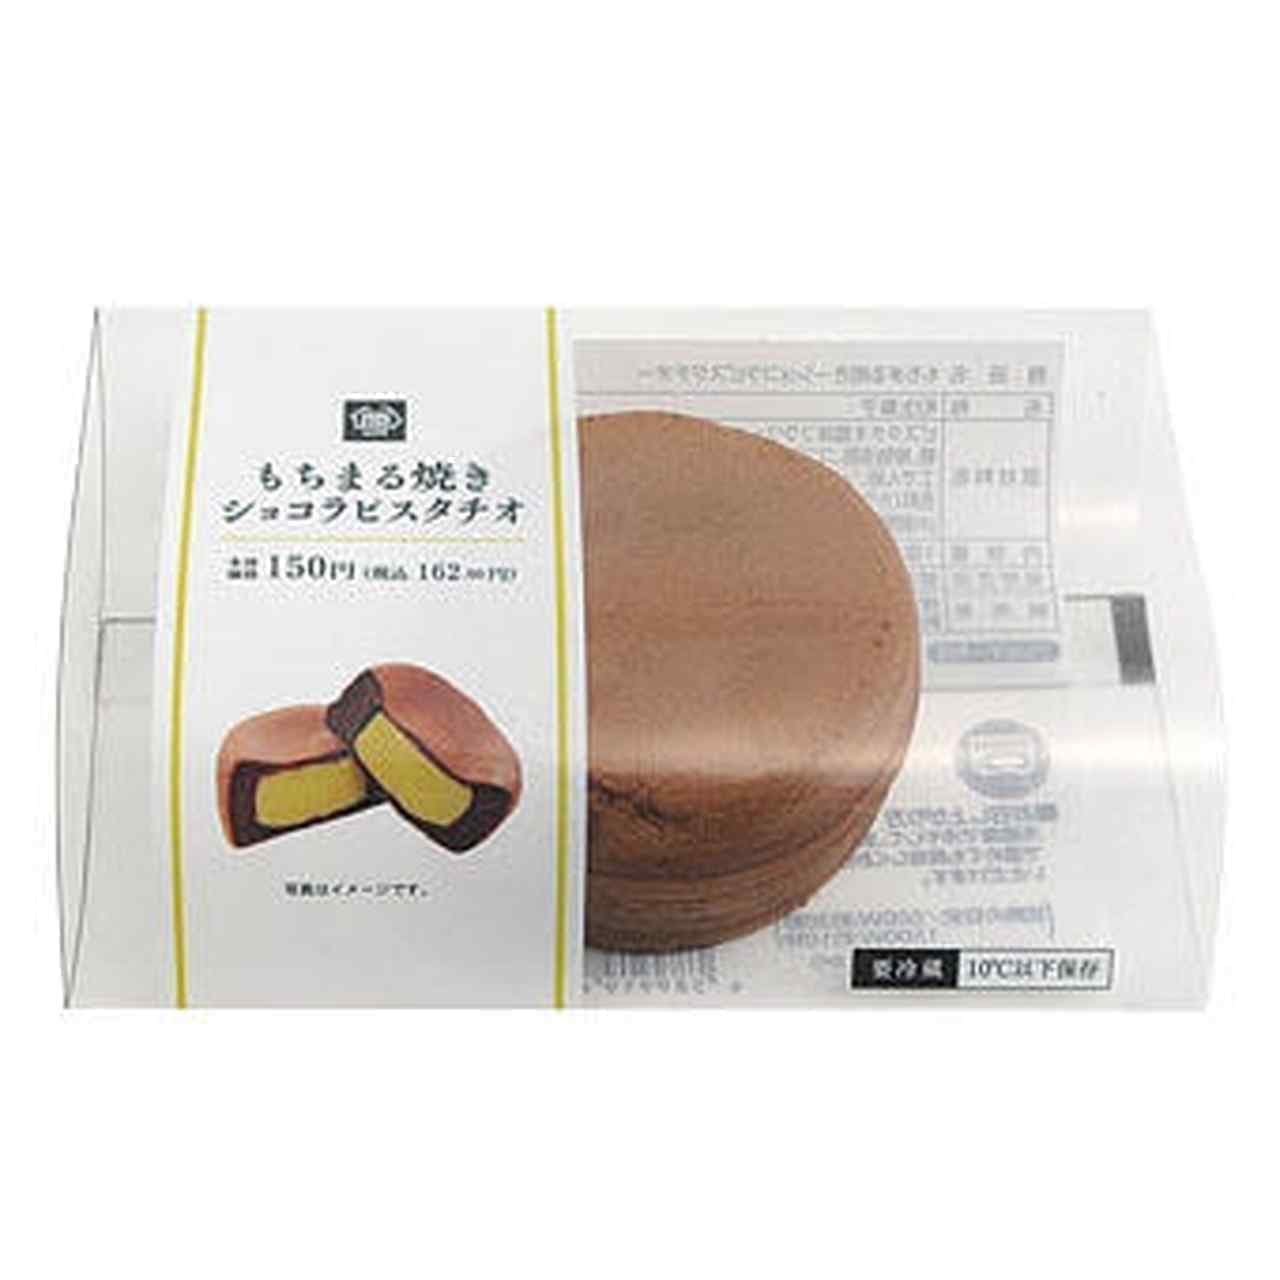 Ministop "Mochimaruyaki Chocolate Pistachio